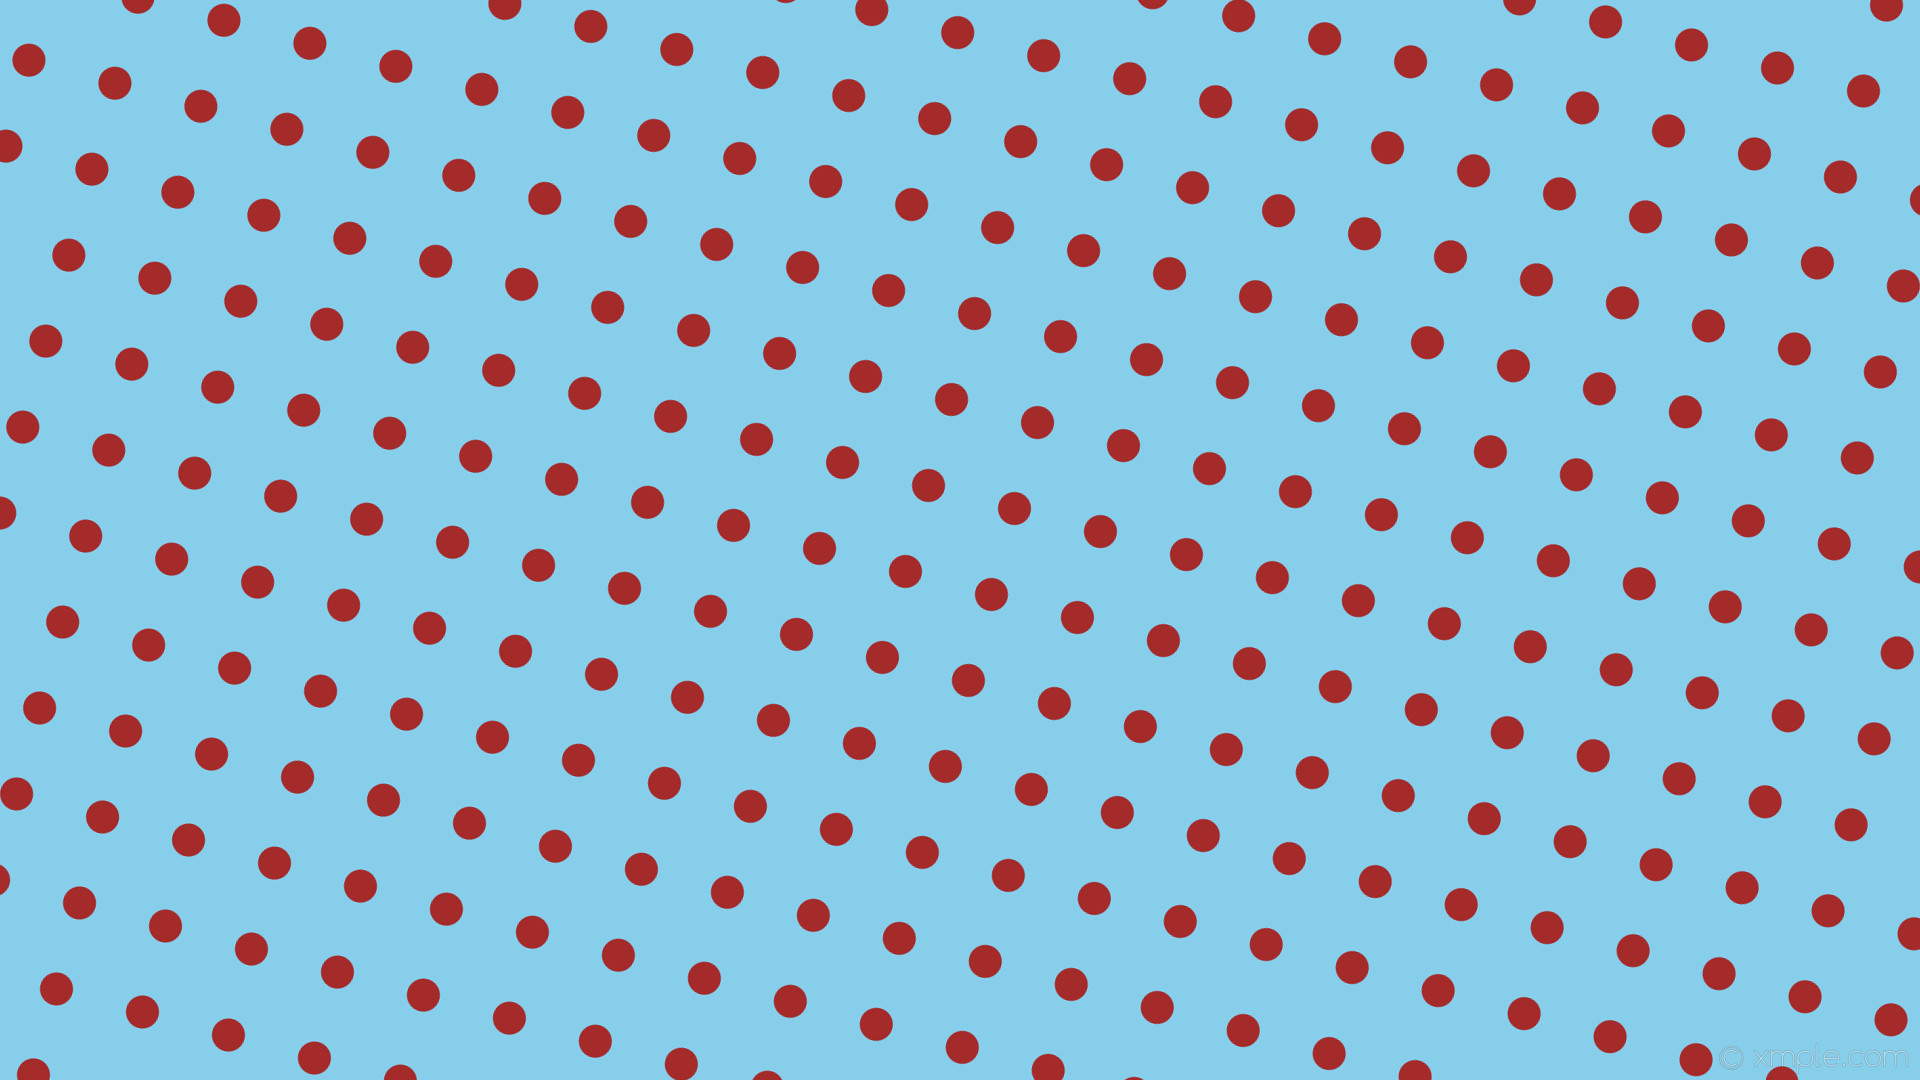 1920x1080 wallpaper spots polka dots brown blue sky blue #87ceeb #a52a2a 345Â° 33px  89px